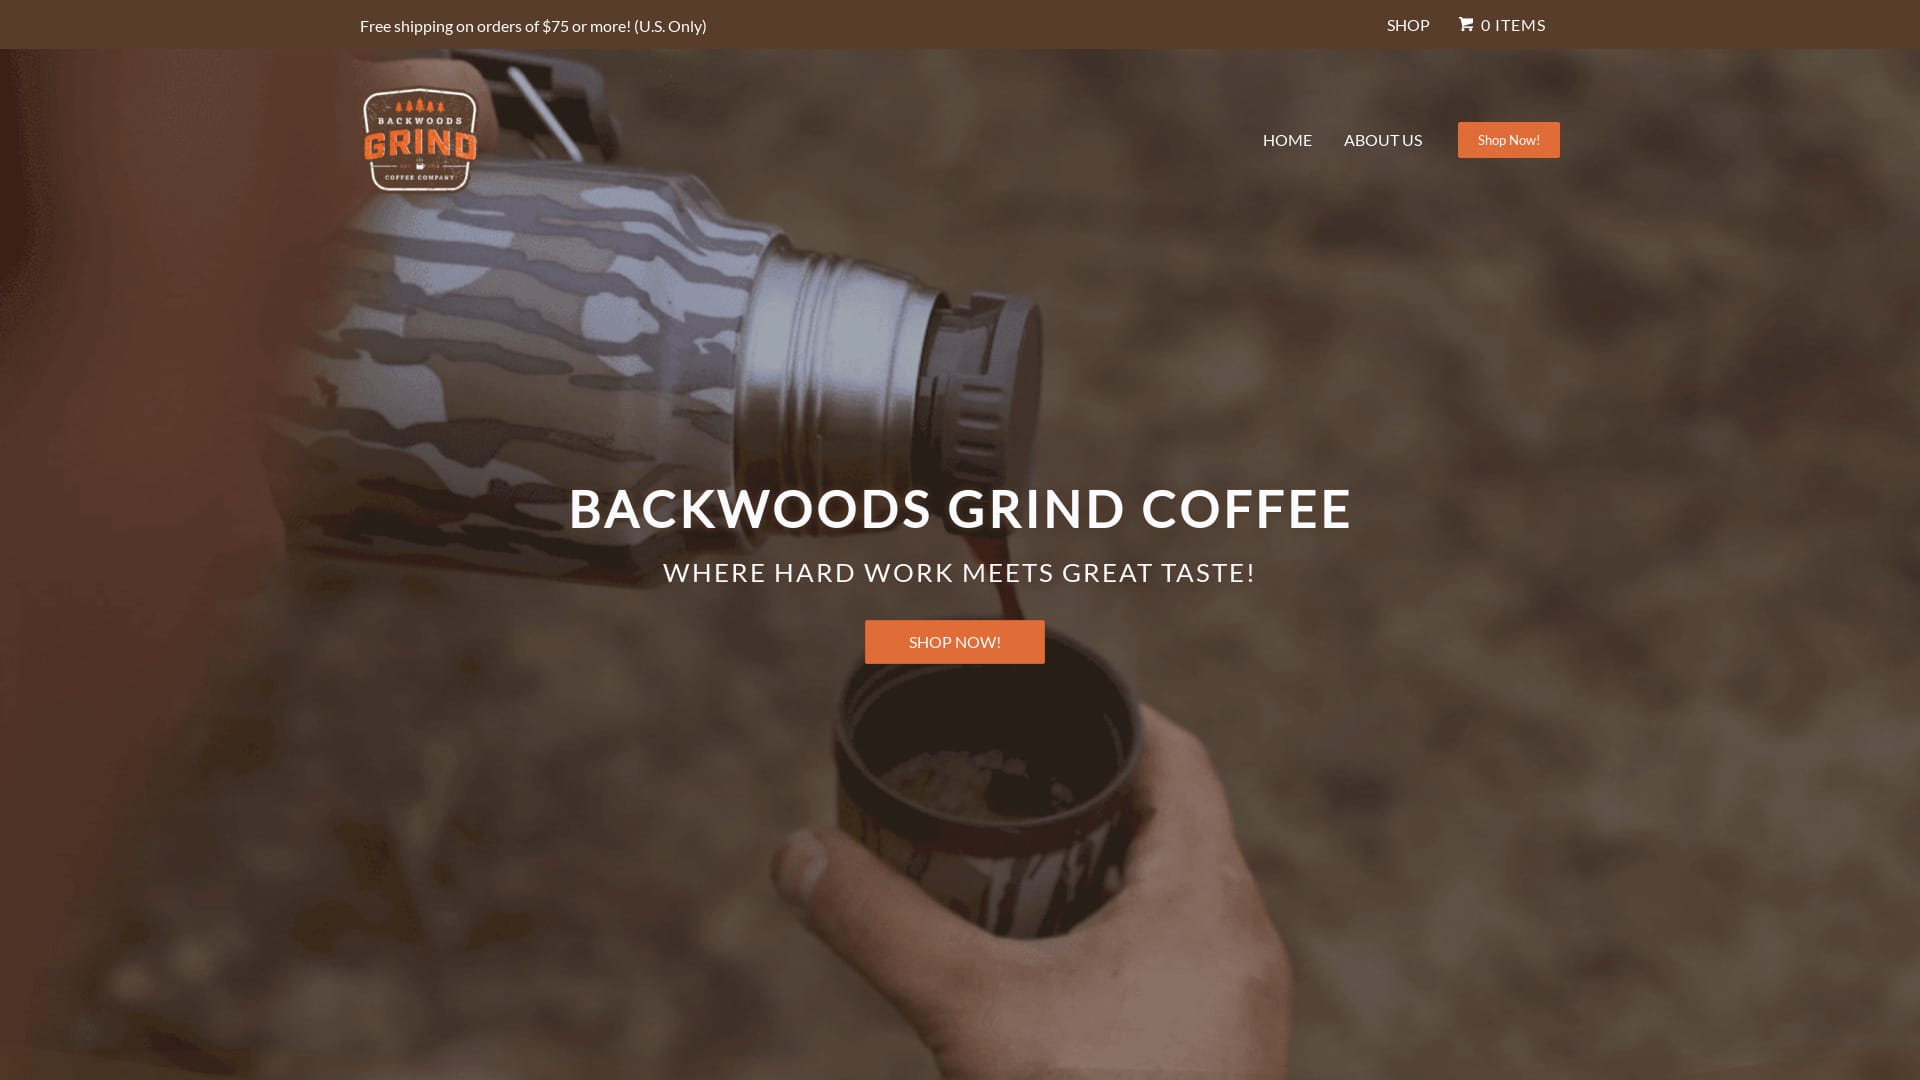 Backwoods Grind Coffee Company